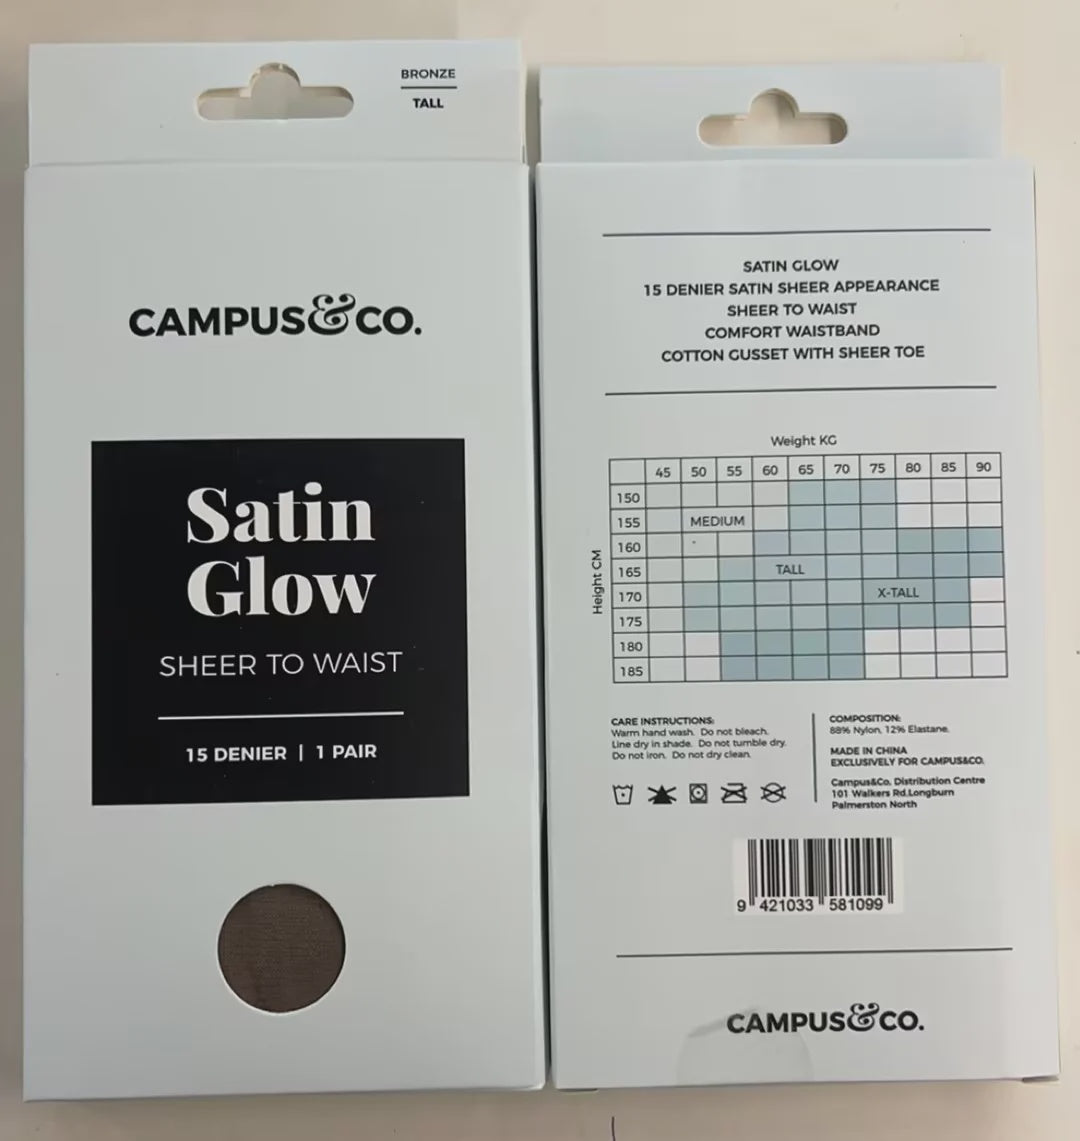 Campus&Co. Satin Glow Bronze Sheer to Waist Medium